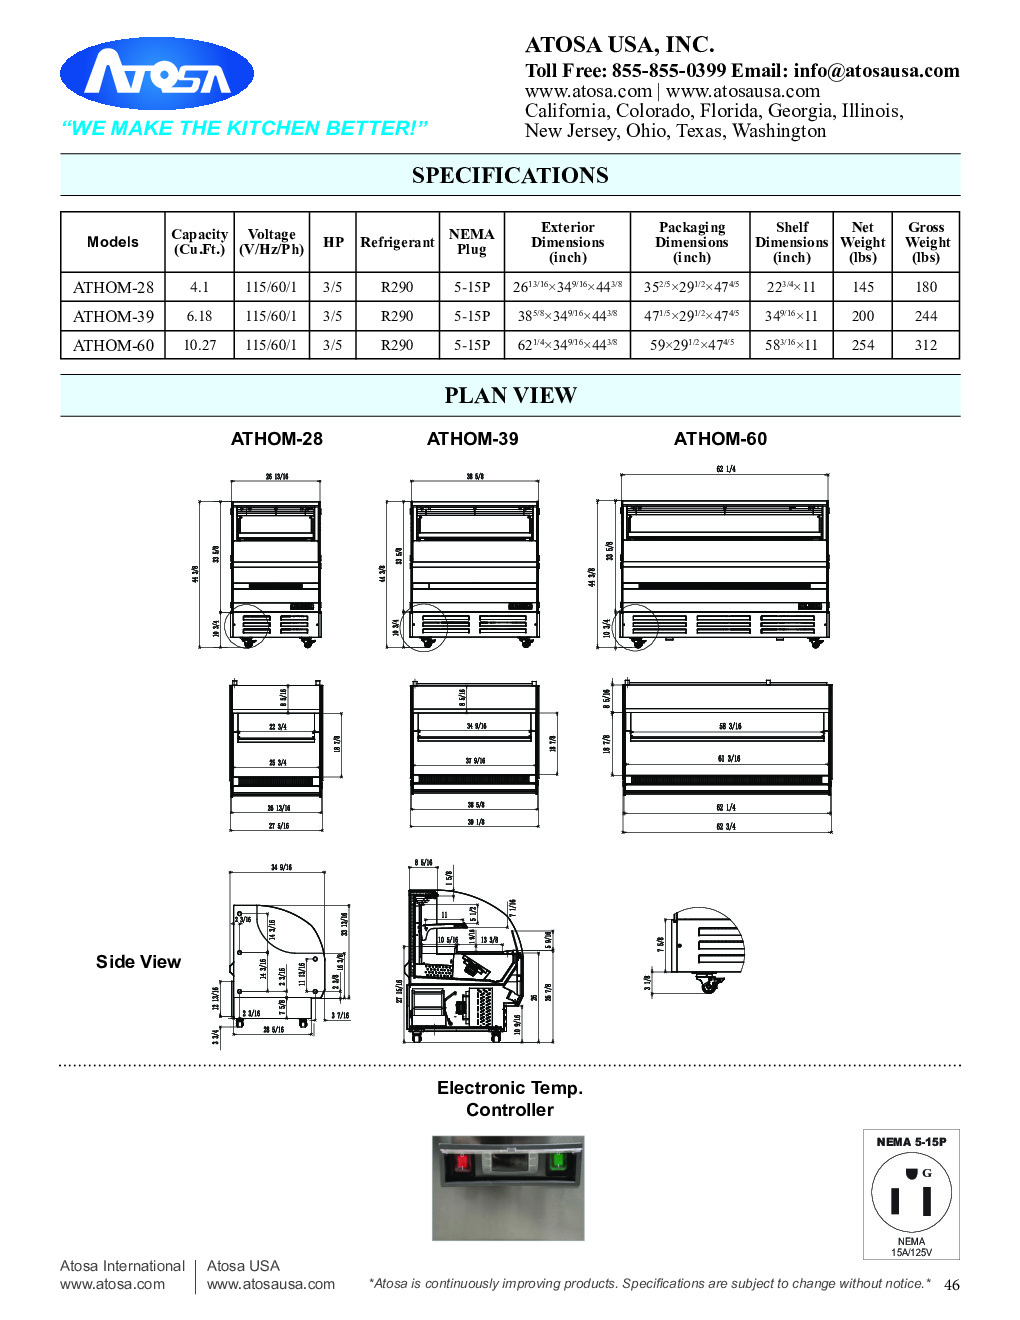 Atosa USA ATHOM-60 Open Refrigerated Display Merchandiser